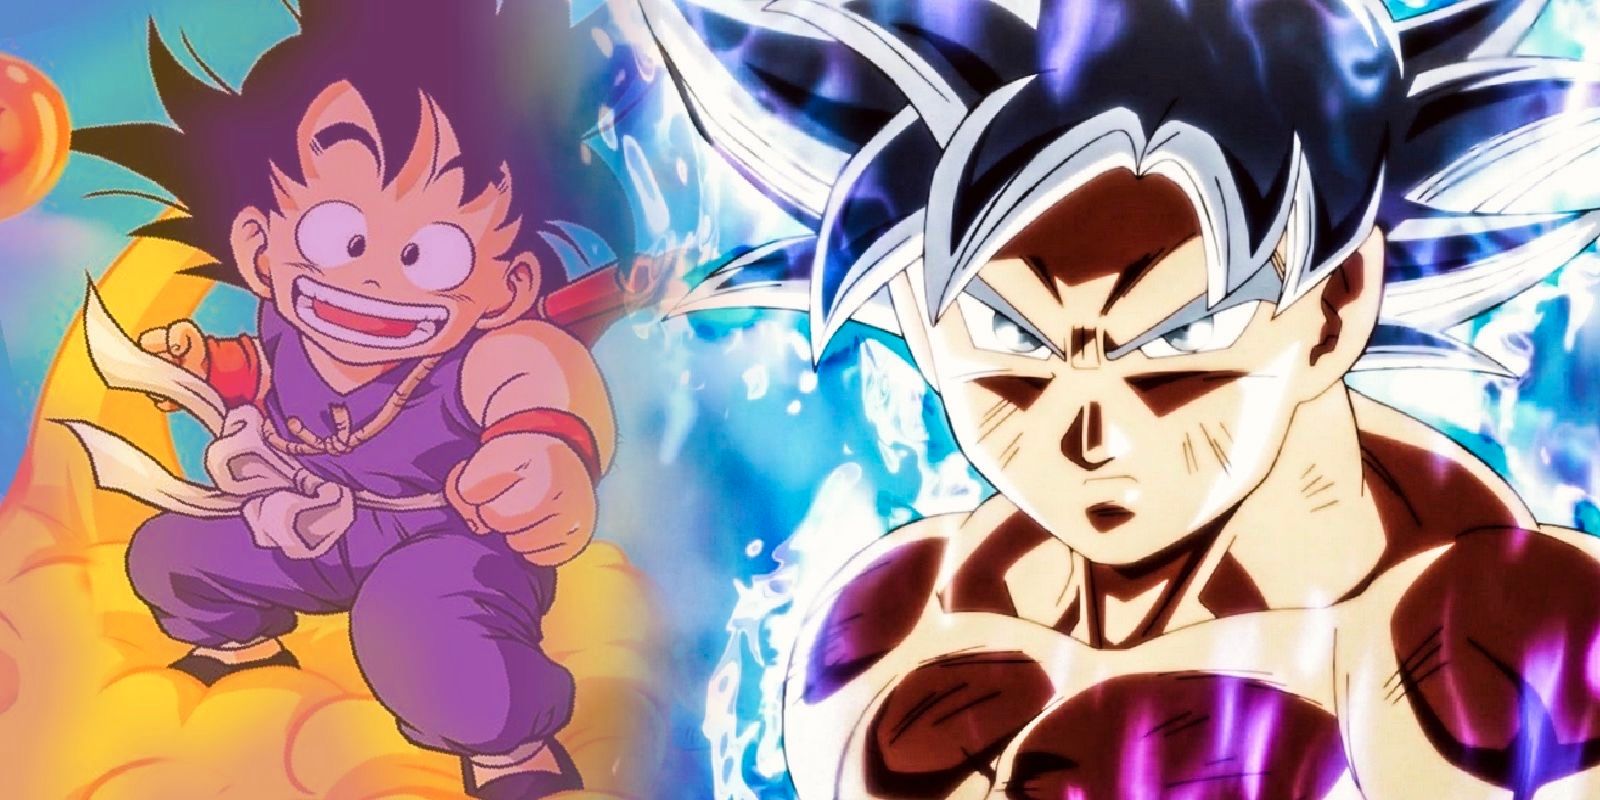 Goku ultra instinct in Dragon Ball Super and kid Goku from the original Dragon Ball anime